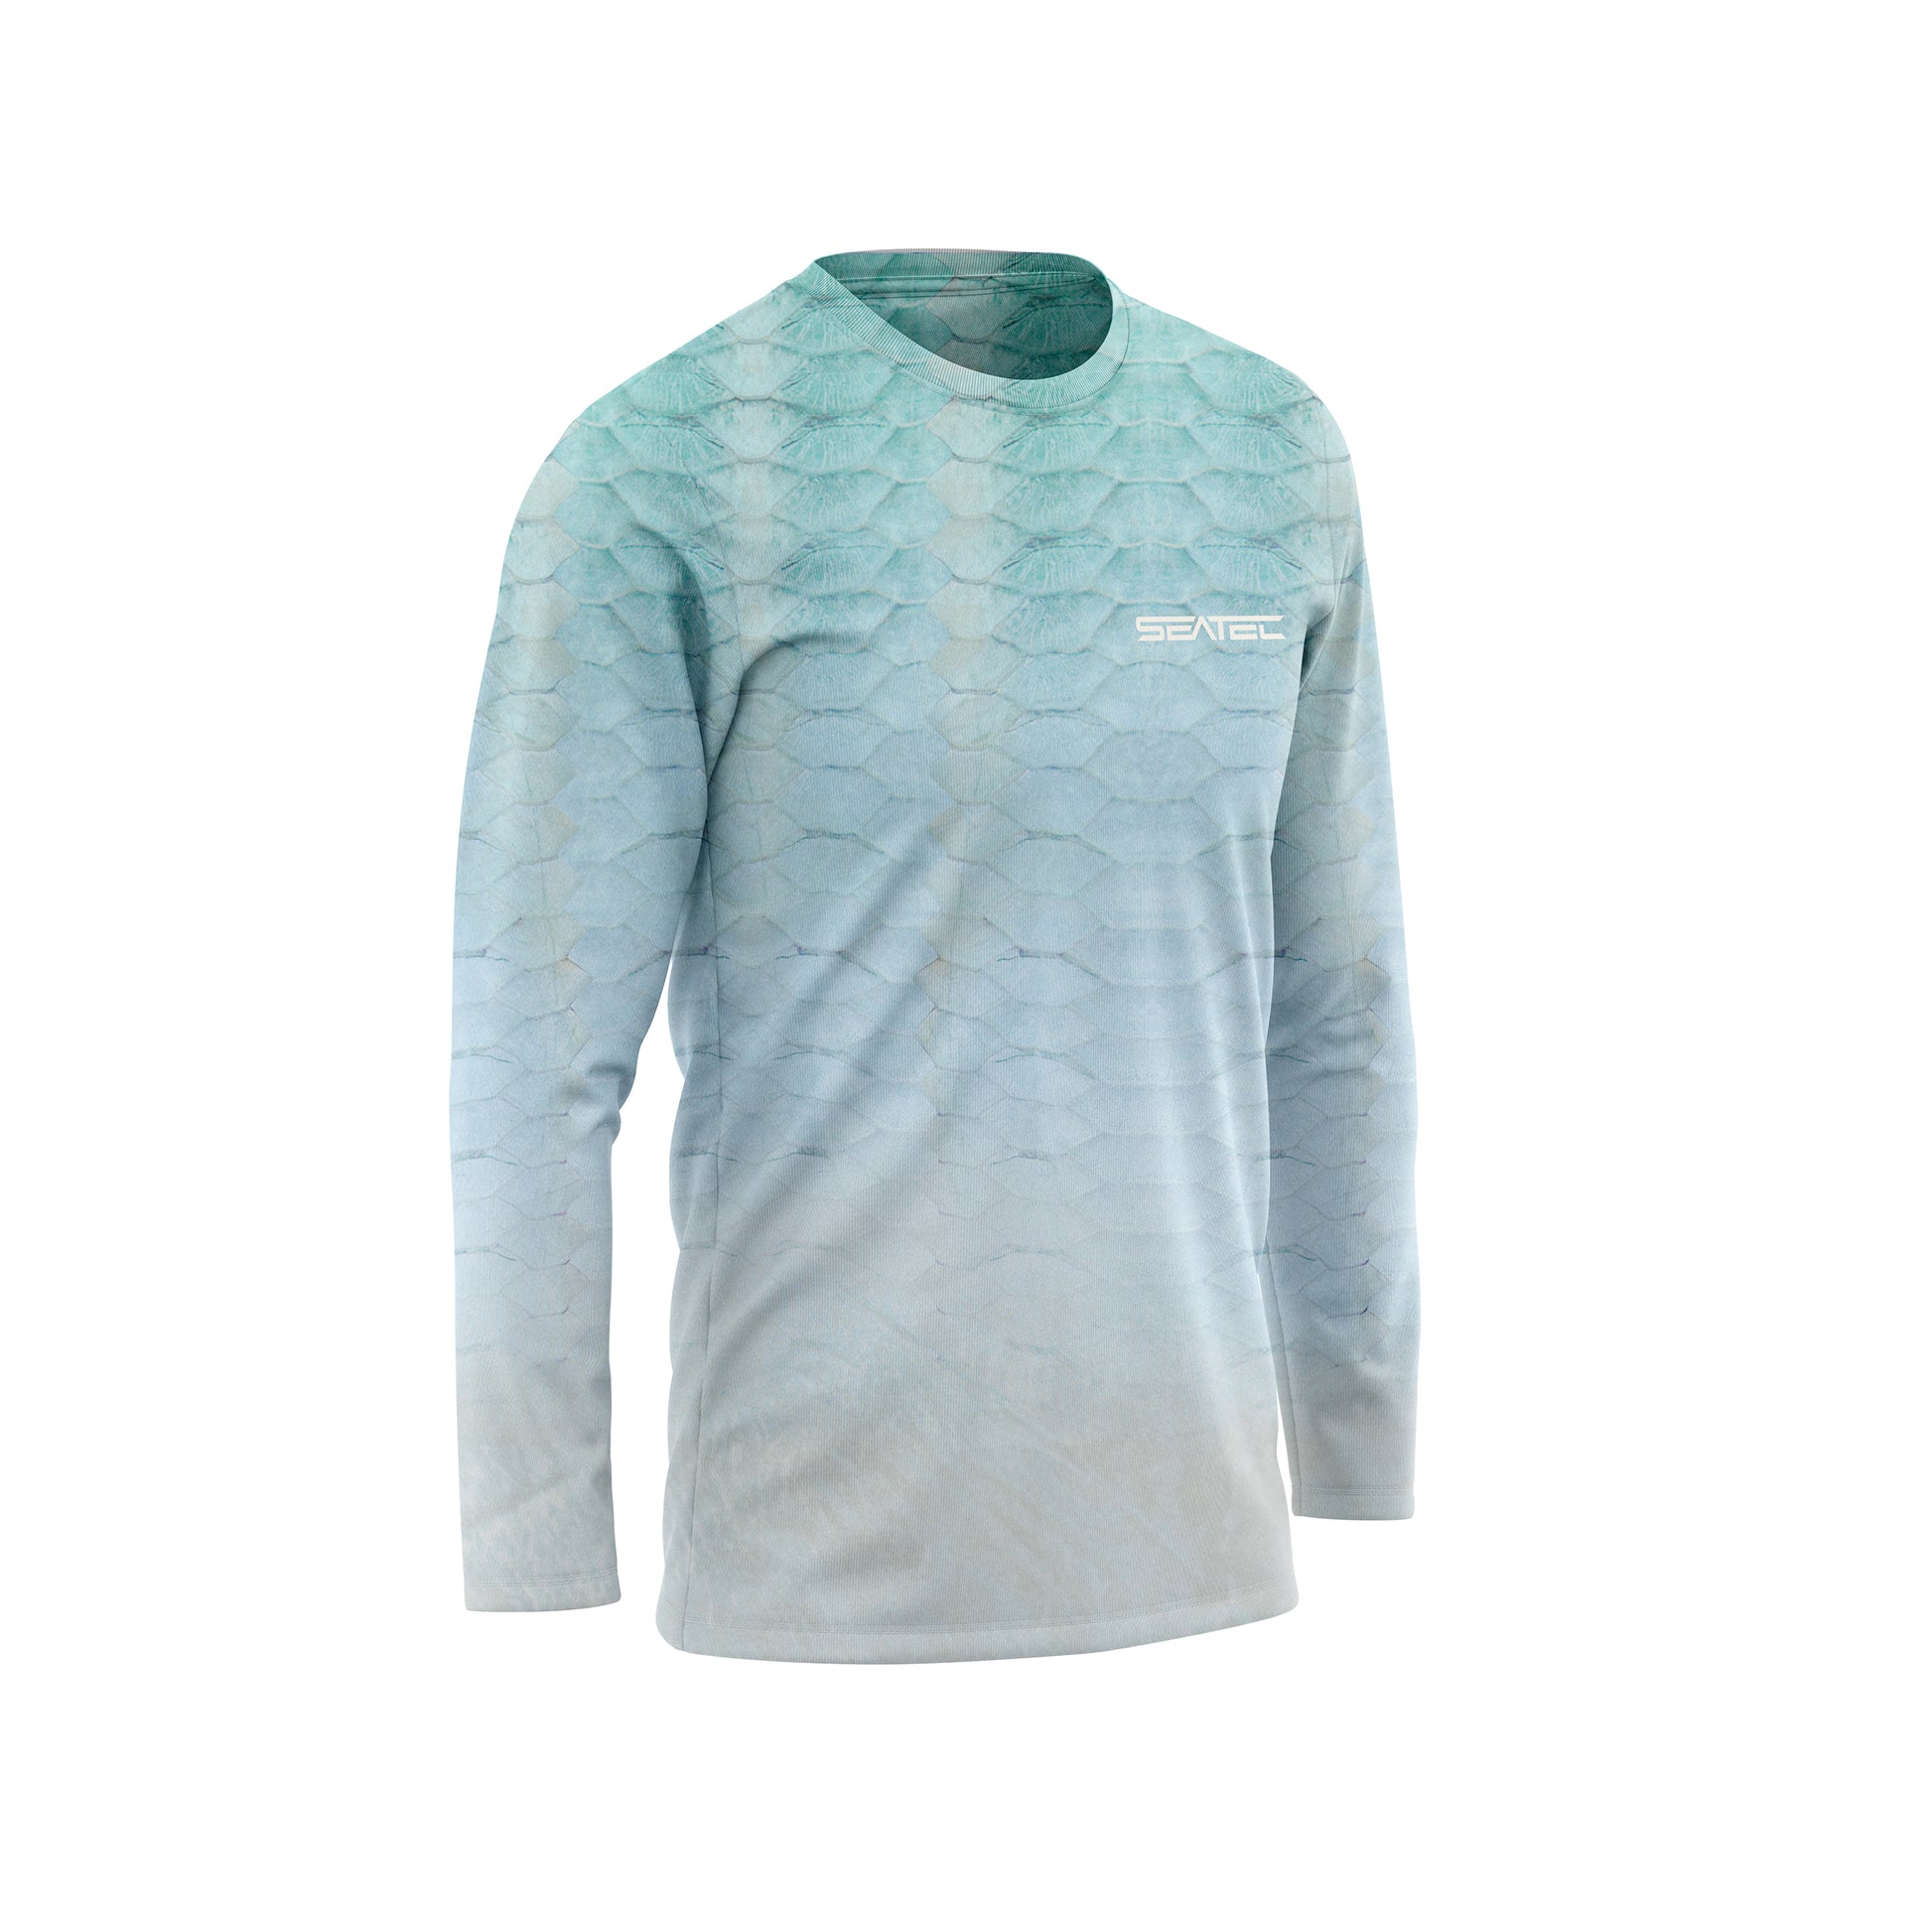 Seatec Outfitters Tarpon Sport Tec Performance Shirt, Long Sleeve - UPF  50+, Snag Resistant, Moisture Wicking